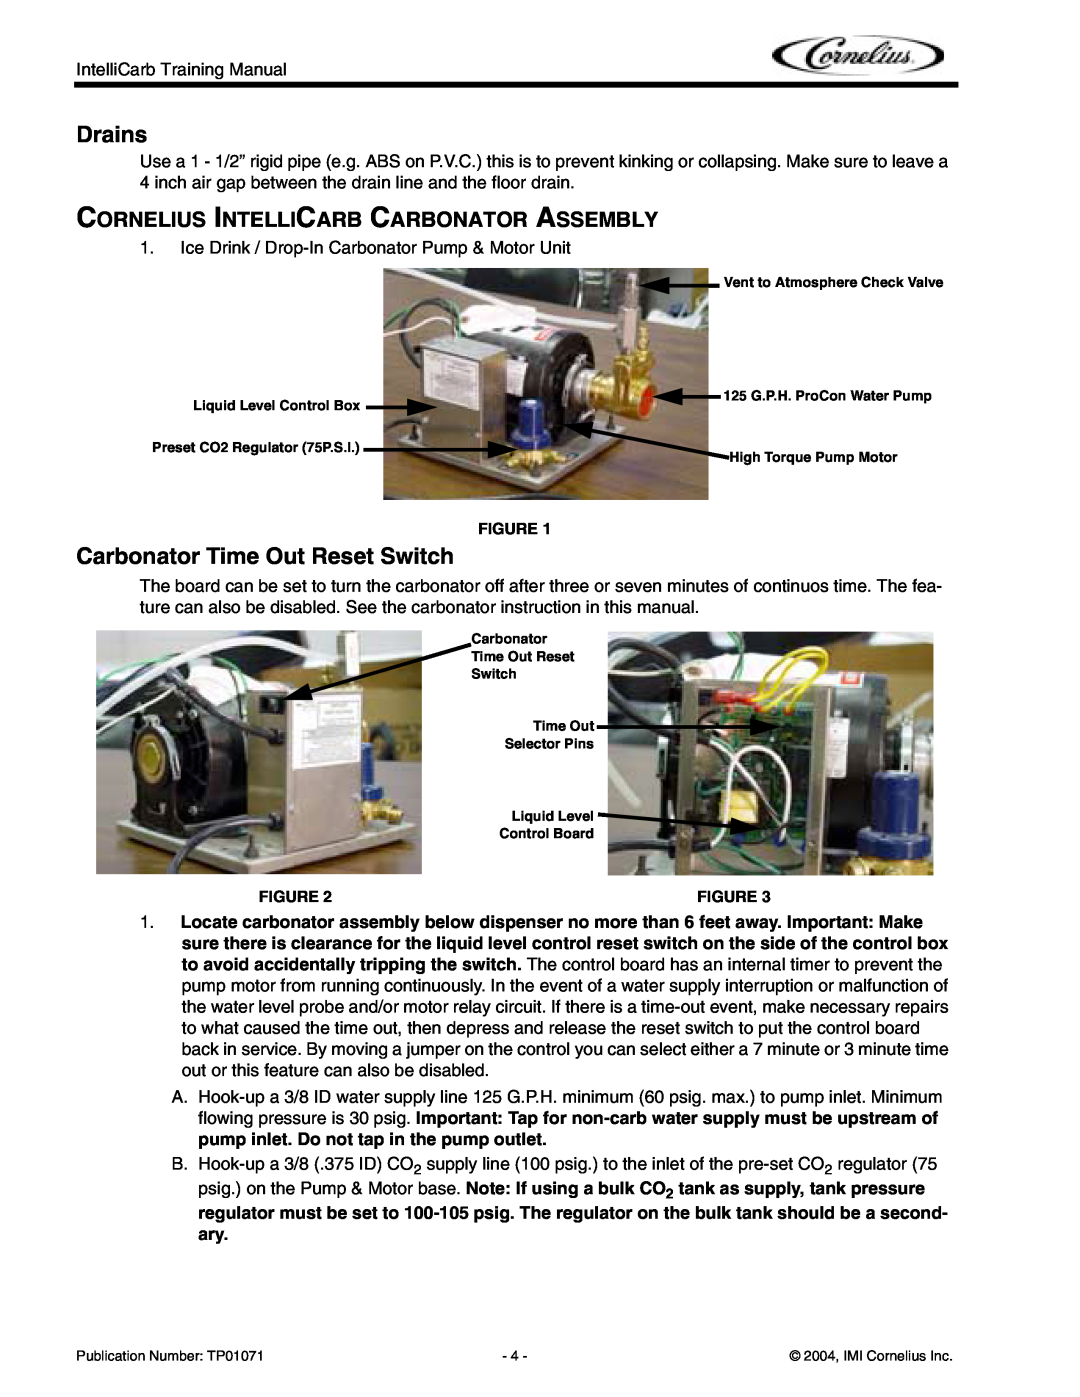 Cornelius Cold Beverage Dispenser Drains, Carbonator Time Out Reset Switch, Cornelius Intellicarb Carbonator Assembly 